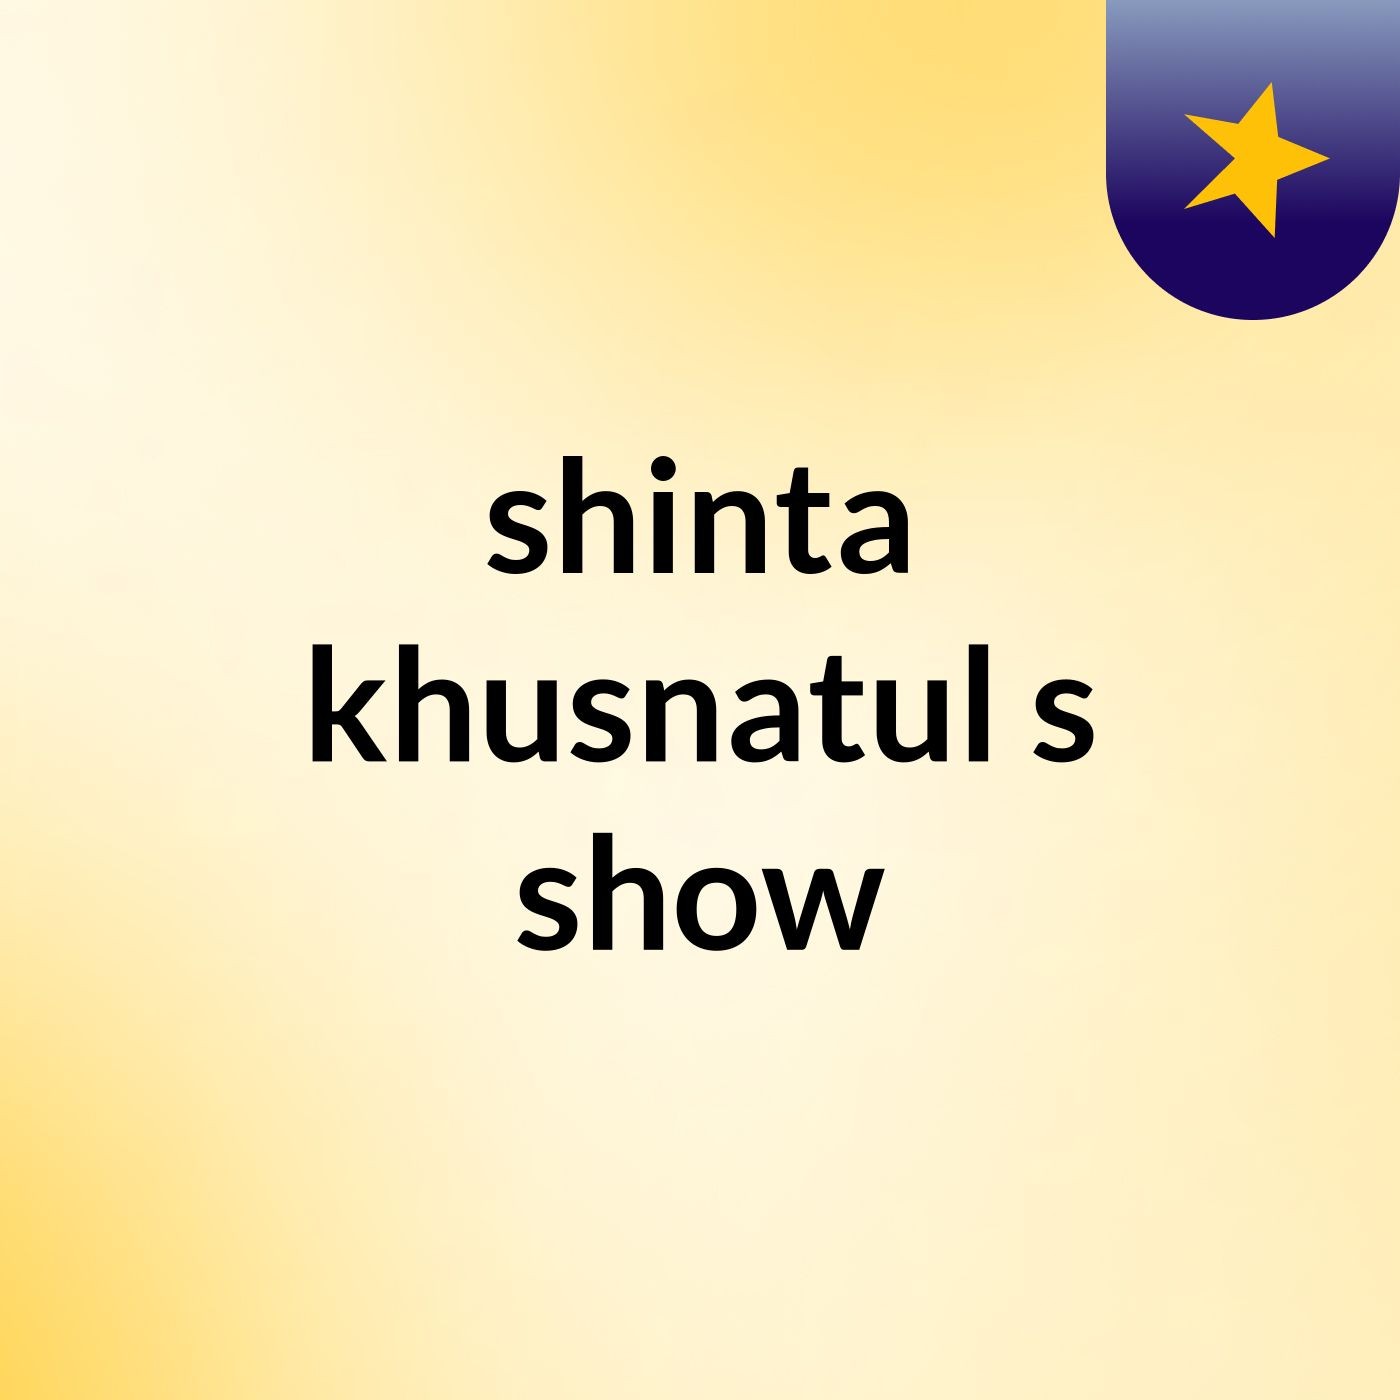 Episode 43 - shinta khusnatul's show